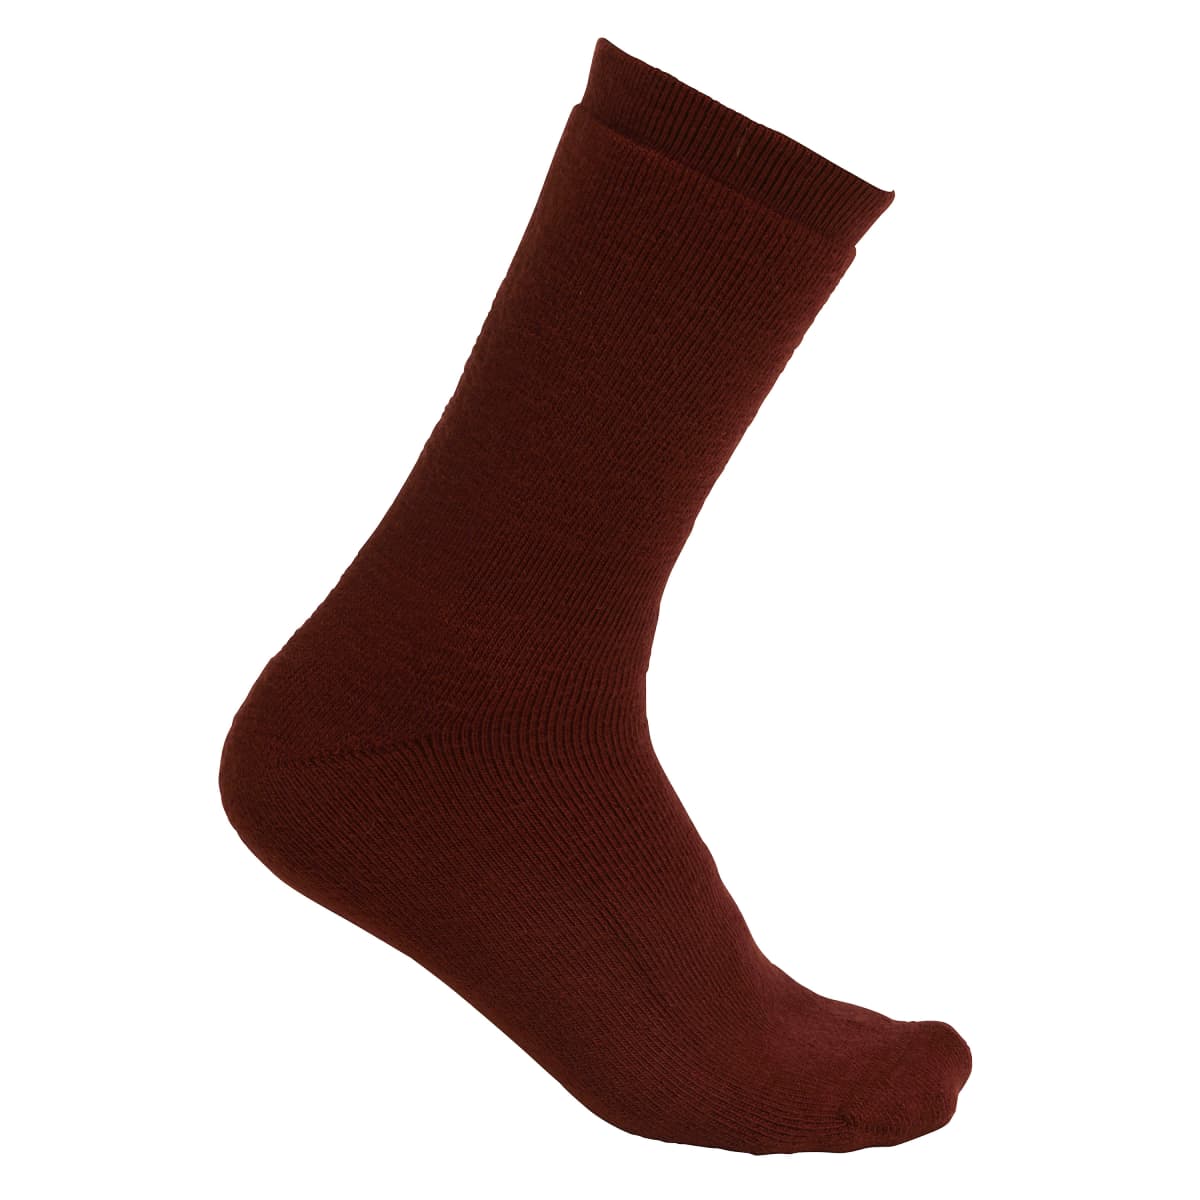 Woolpower Socks - 400 g / m² - Rust Red